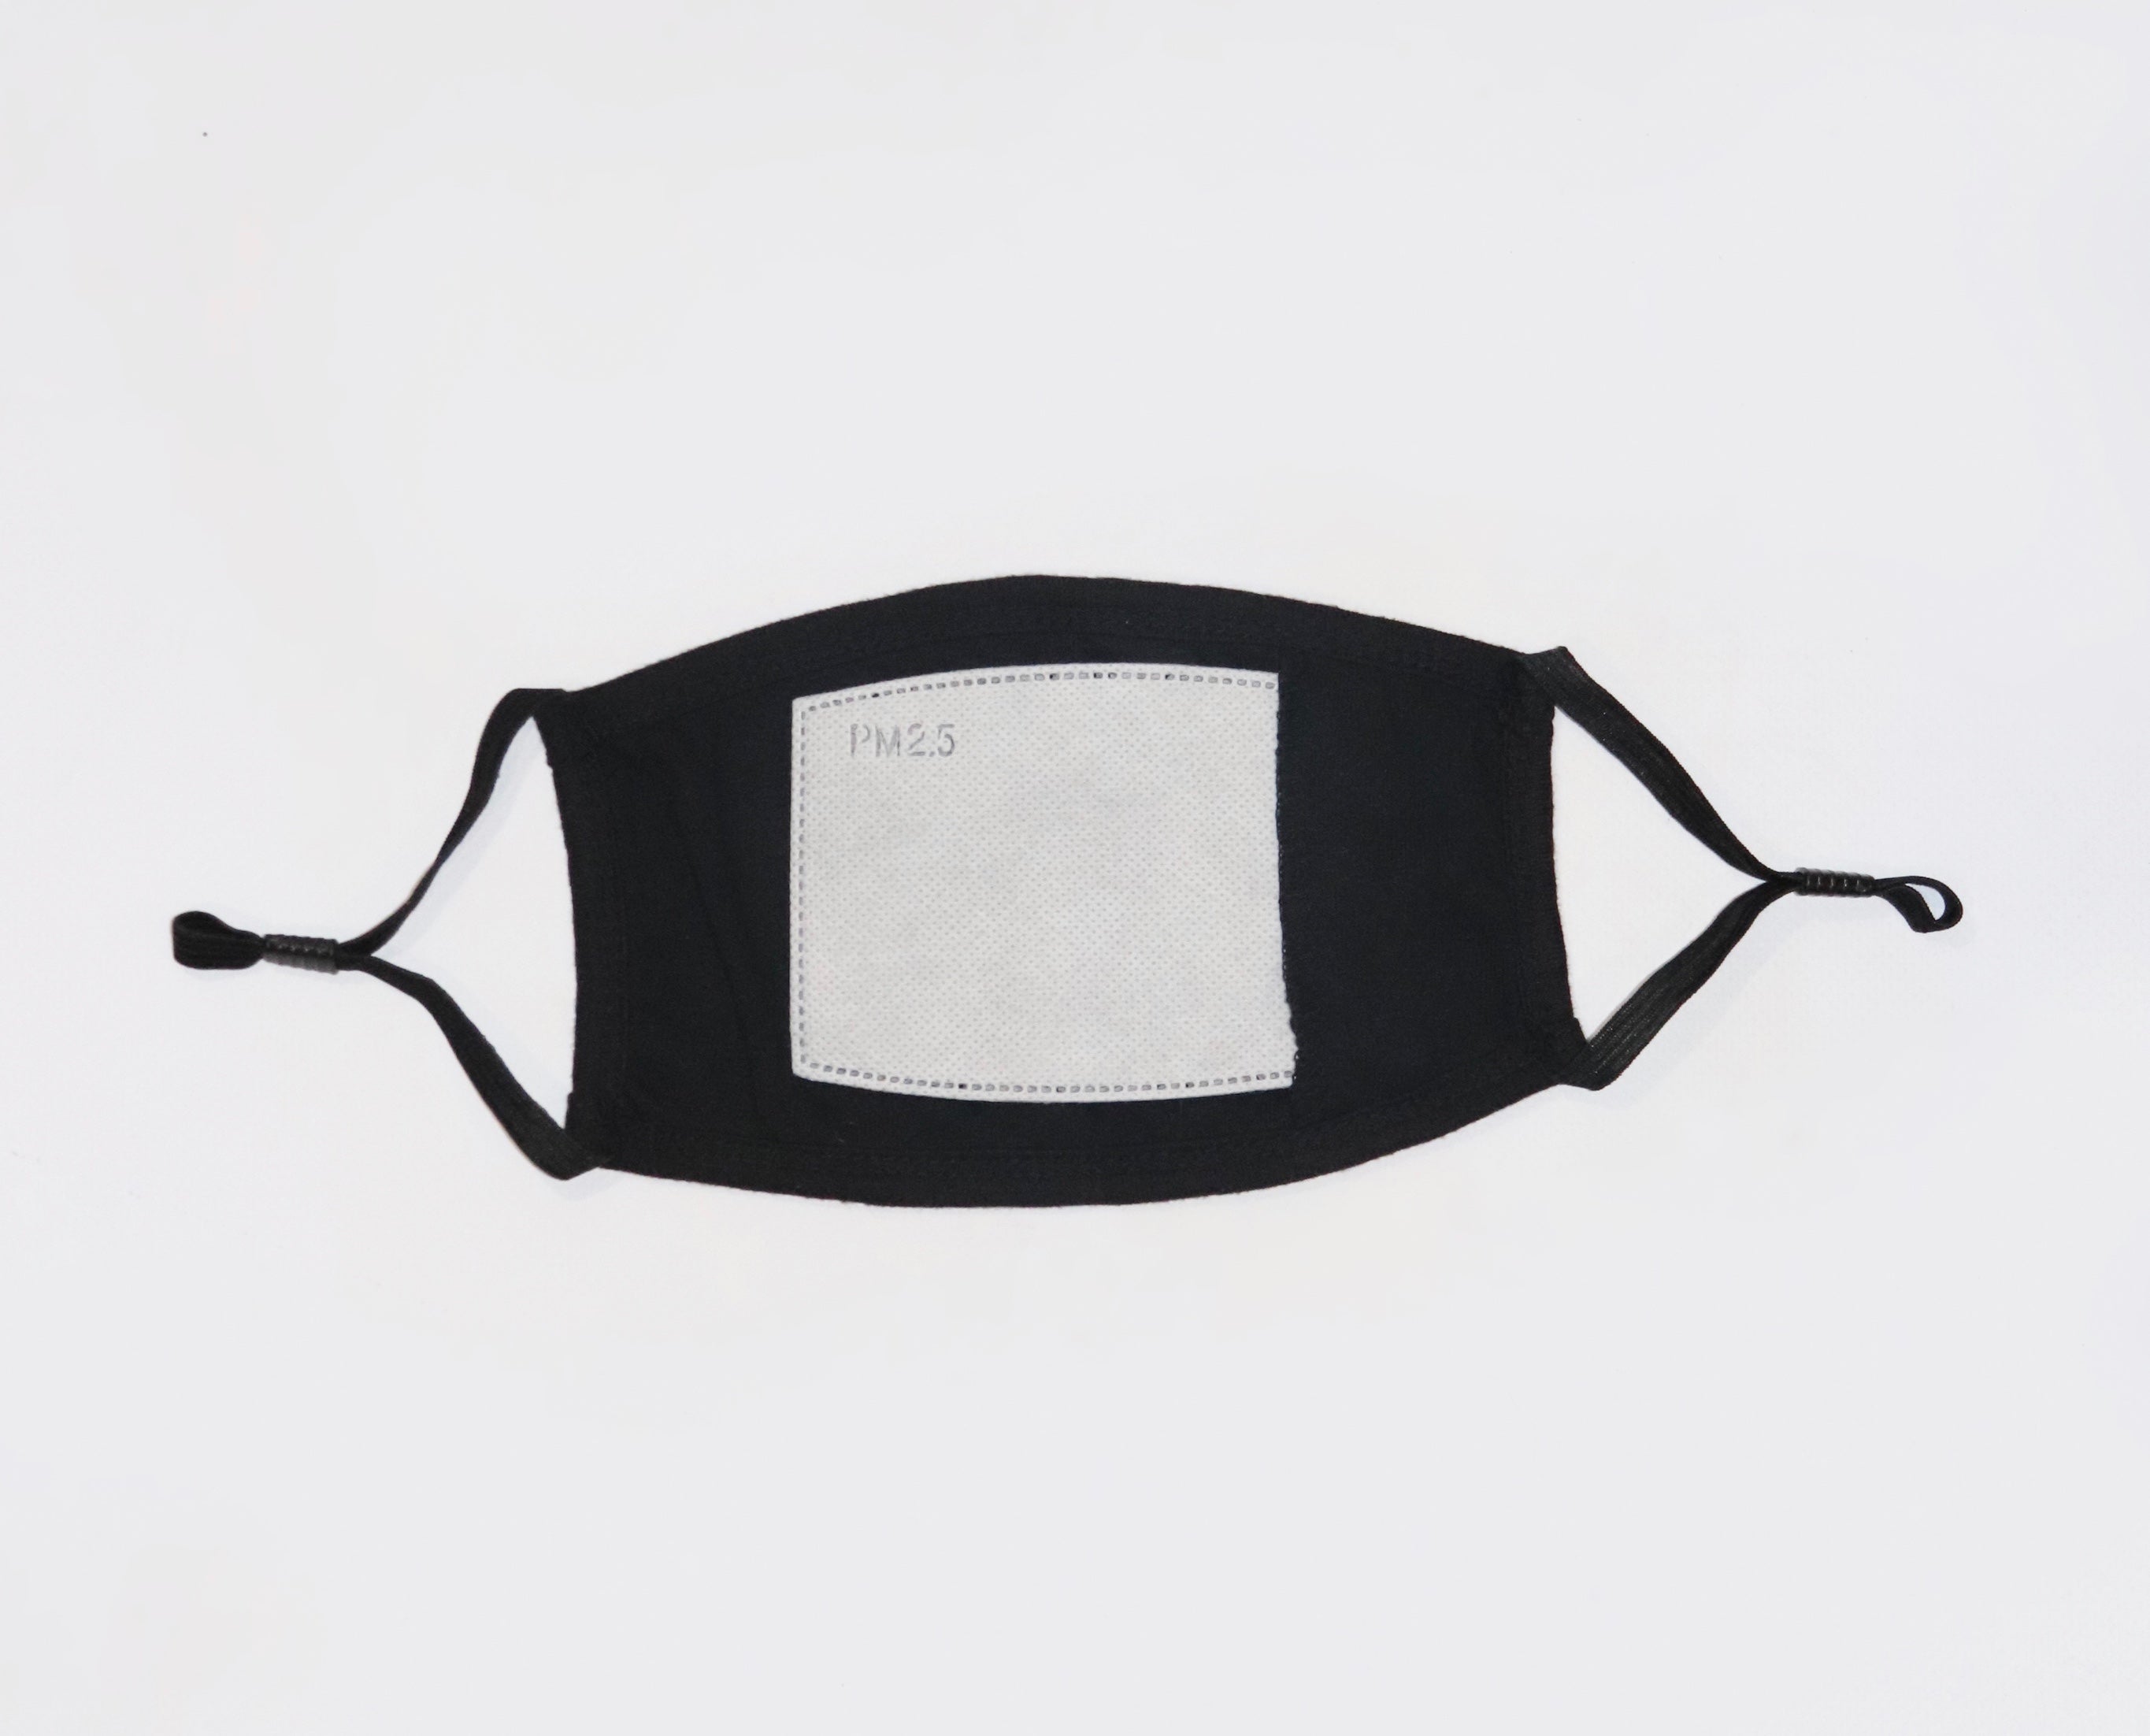 Bundle Fabric Masks w/ PM2.5 Filter